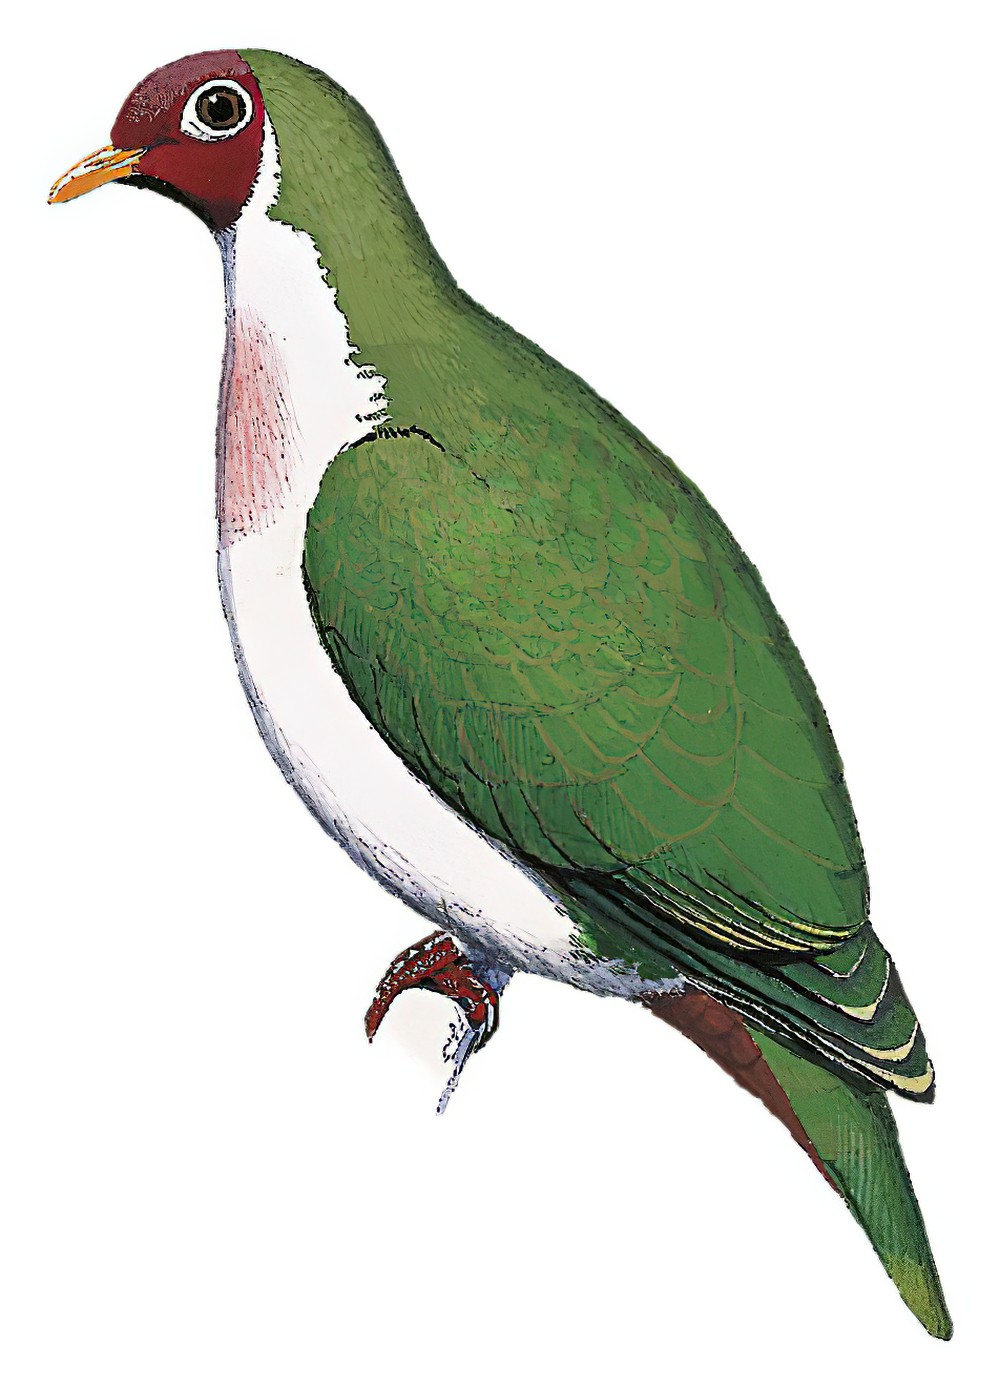 Jambu Fruit-Dove / Ptilinopus jambu